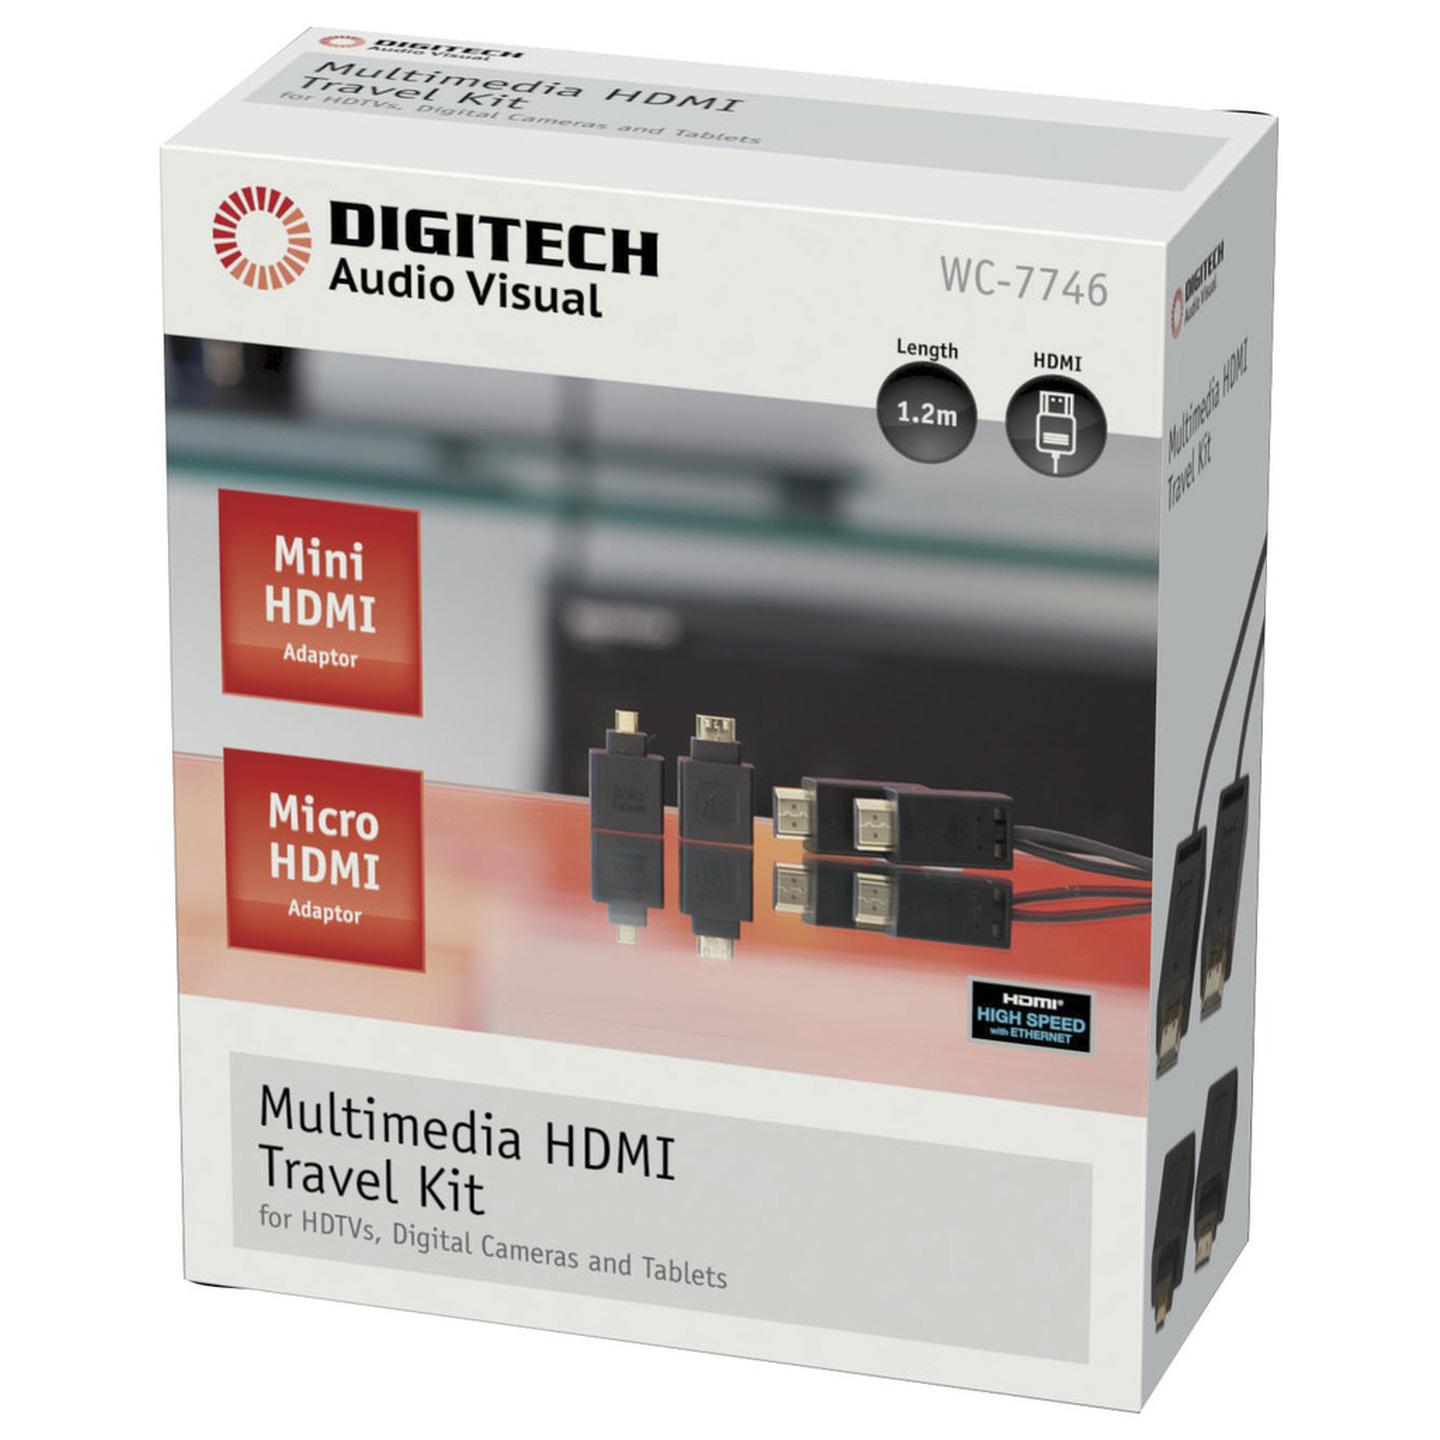 Multimedia HDMI Travel Kit